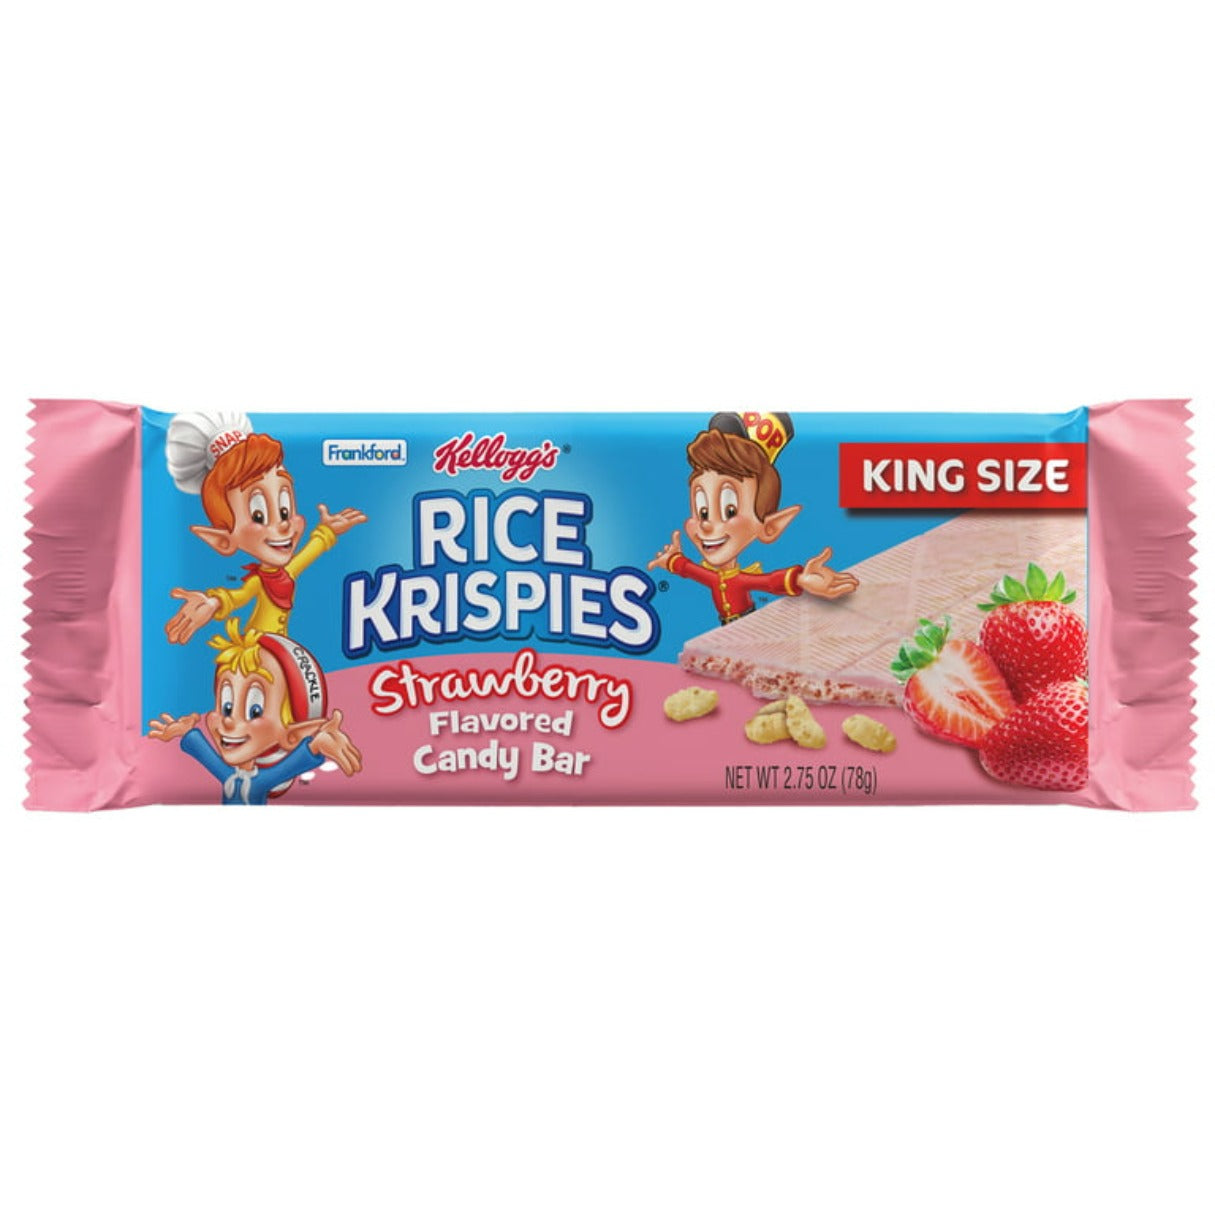 Frankford Kellogg's Rice Krispies Strawberry King Size Bar 2.75oz - 108ct